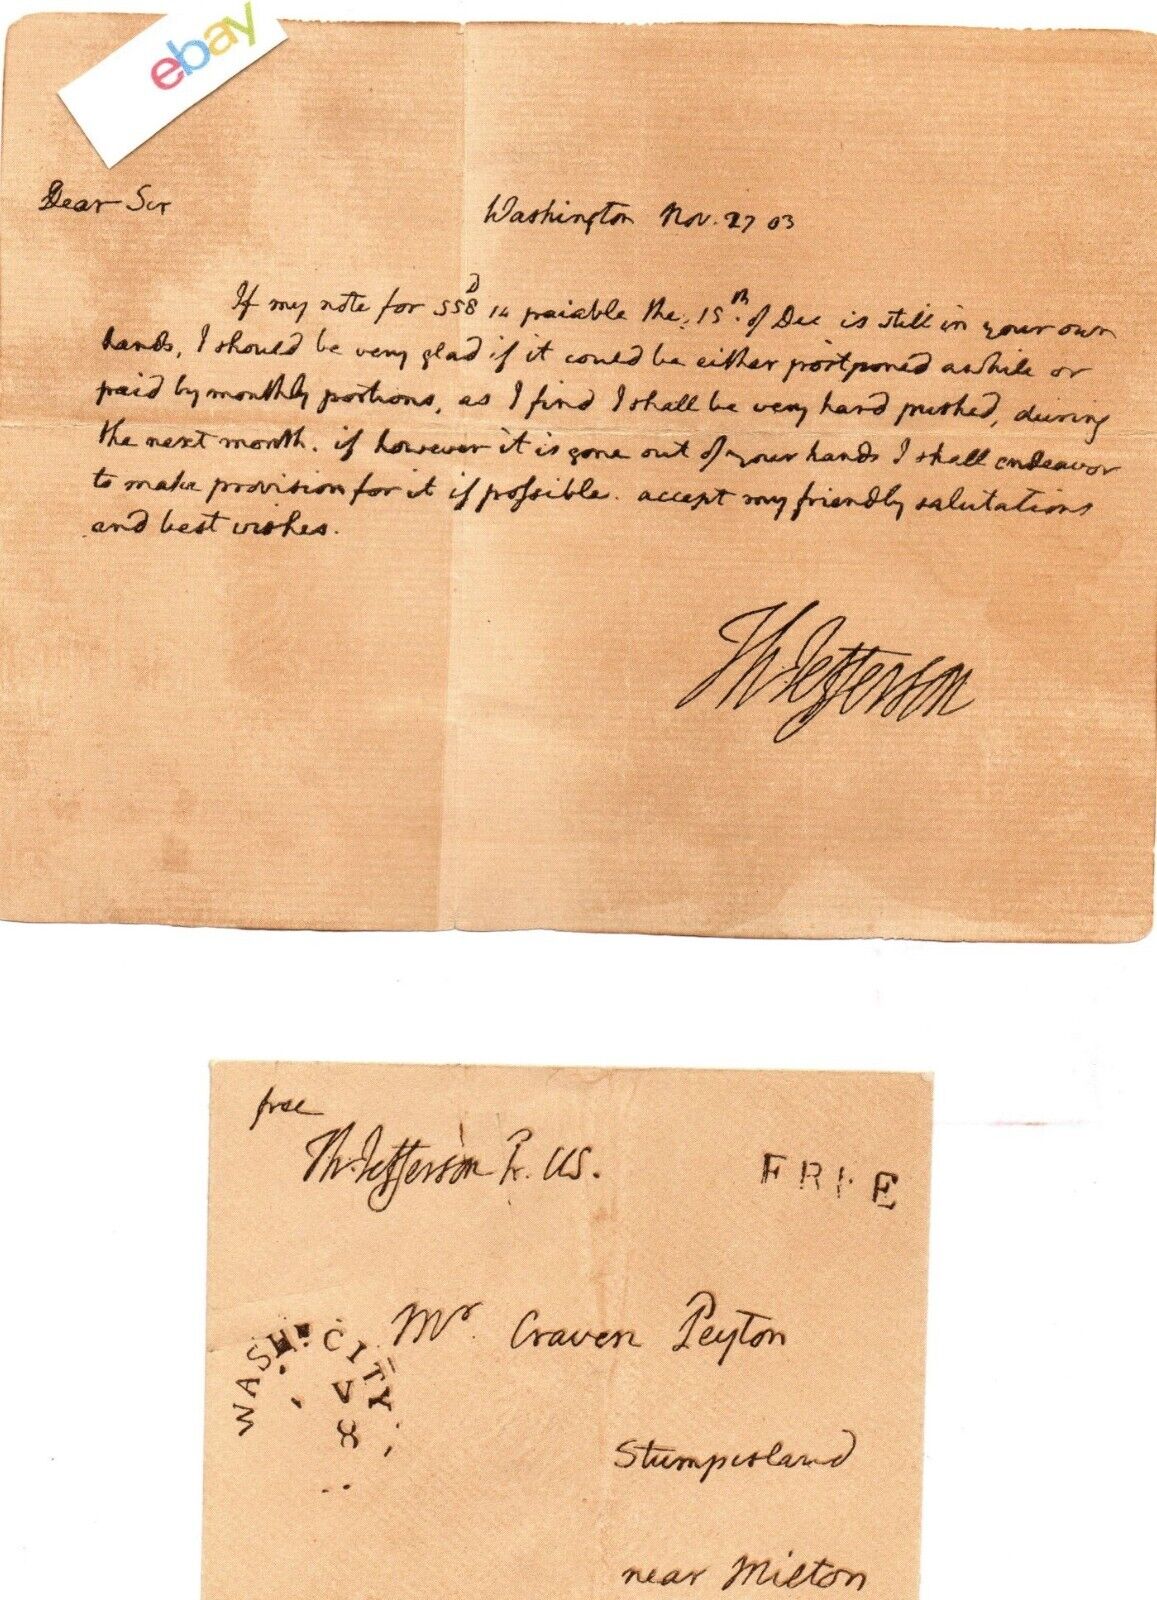 1803 Letter From President Thomas Jefferson To Mr. Craven Peyton